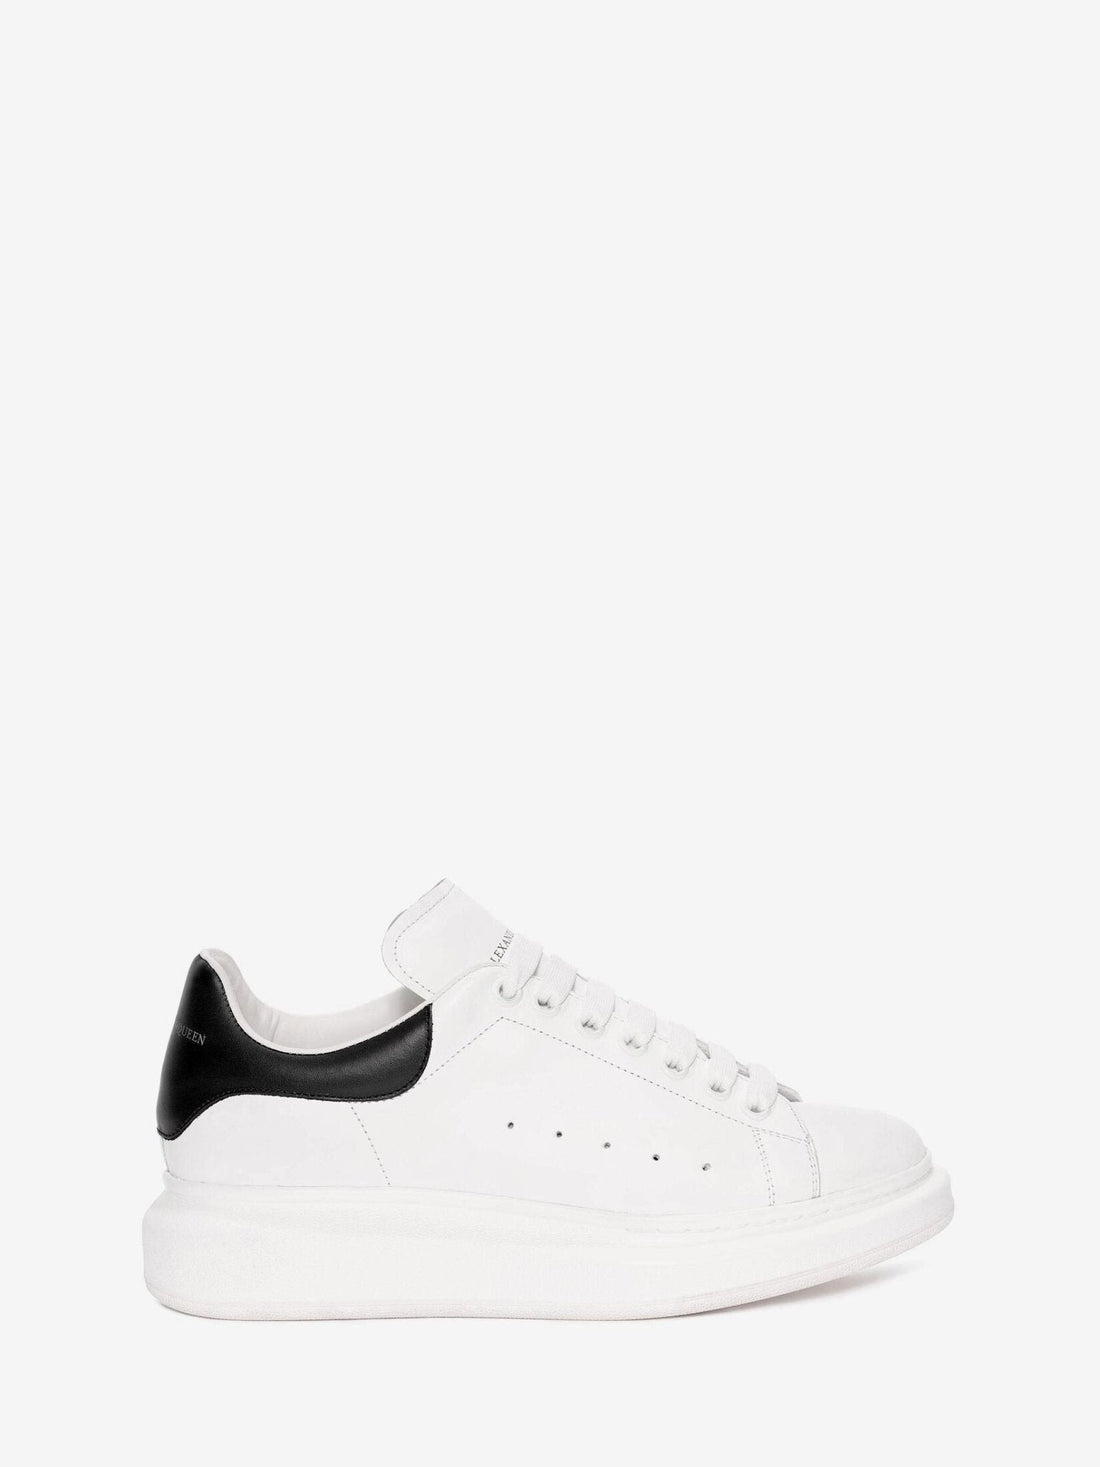 Alexander McQueen Oversized Sneaker in White/black - VIARESELL